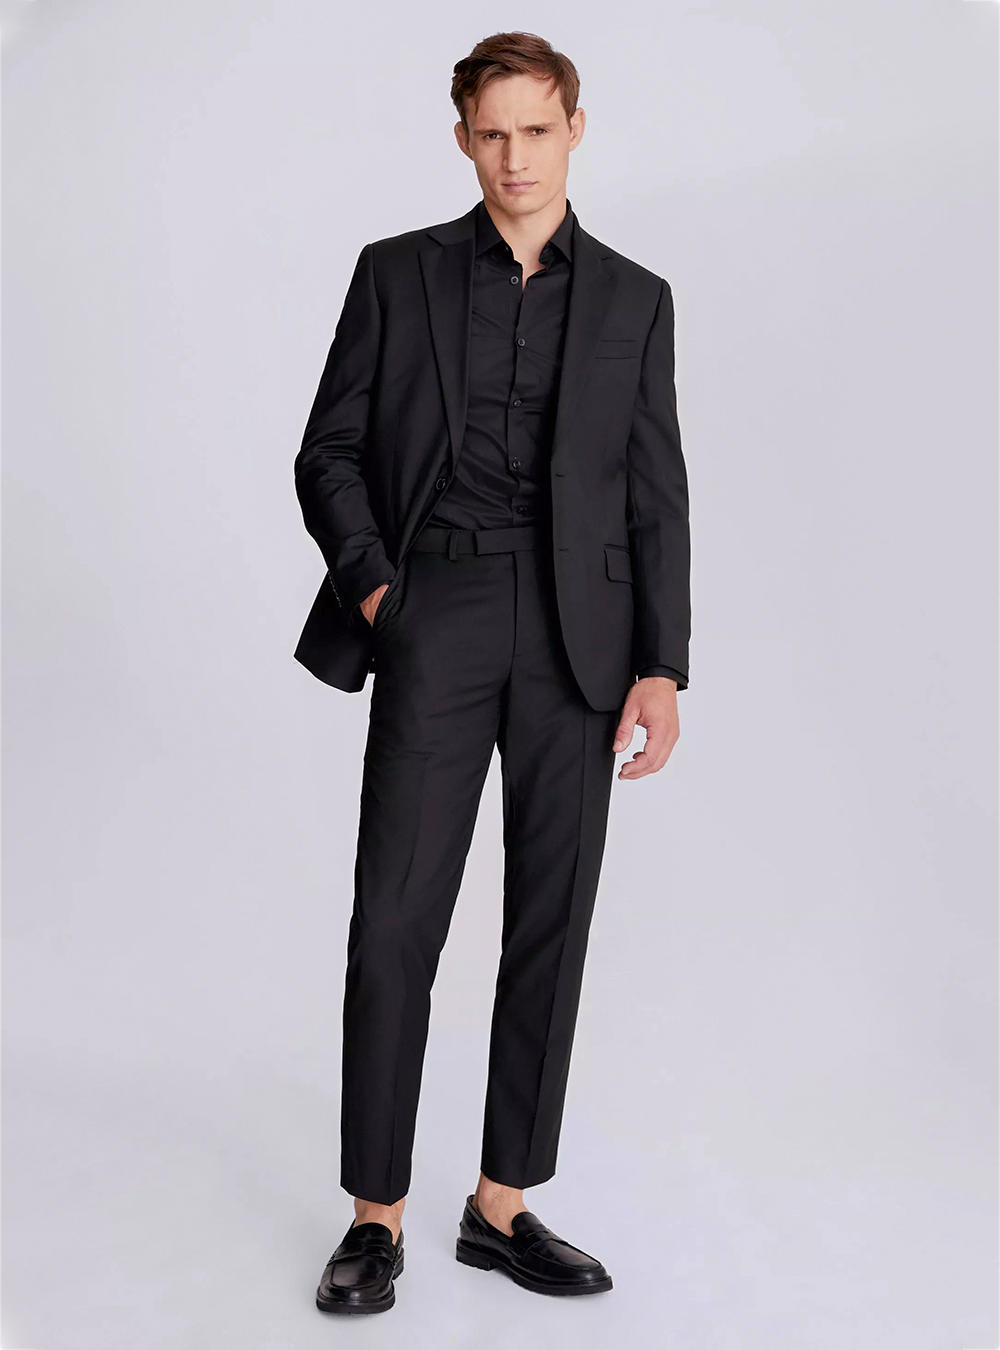 Black suit, black shirt and black loafers